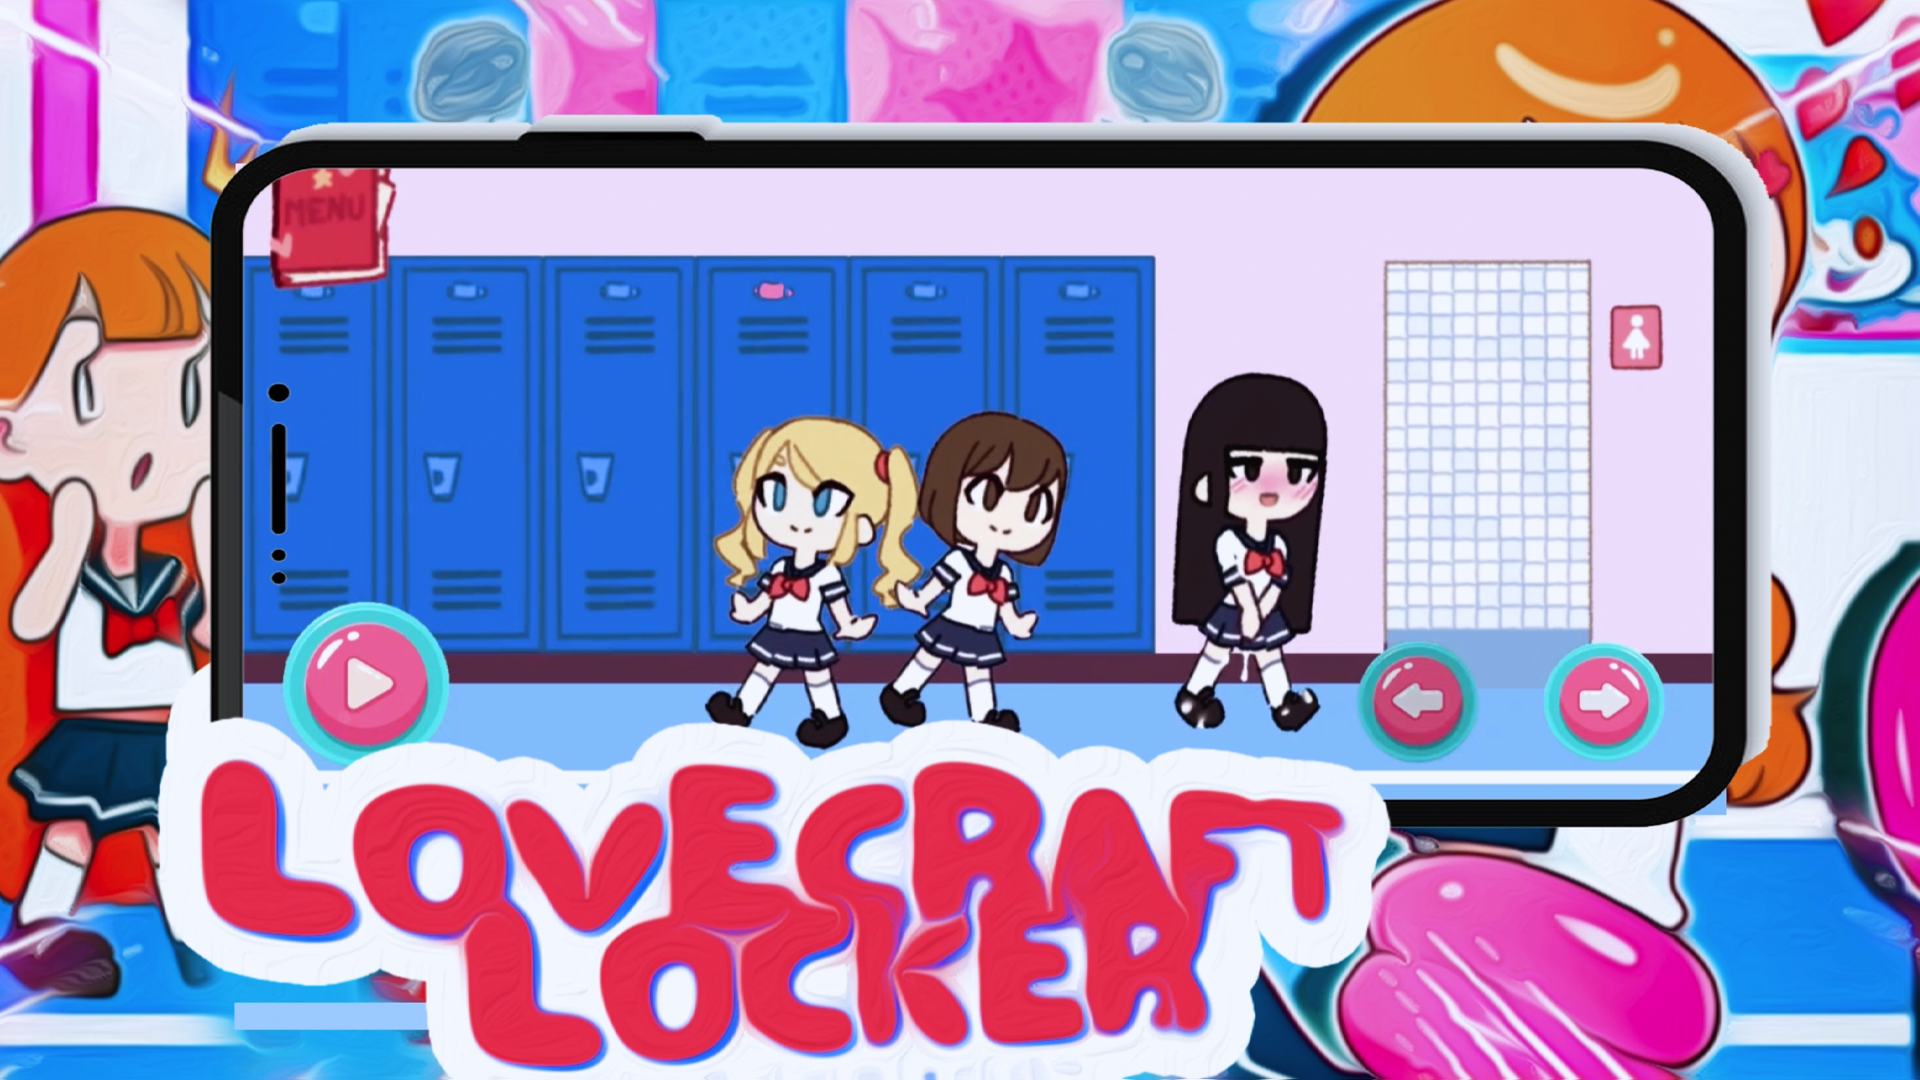 Screenshot 1 of LoveCraft Locker ဂိမ်း 